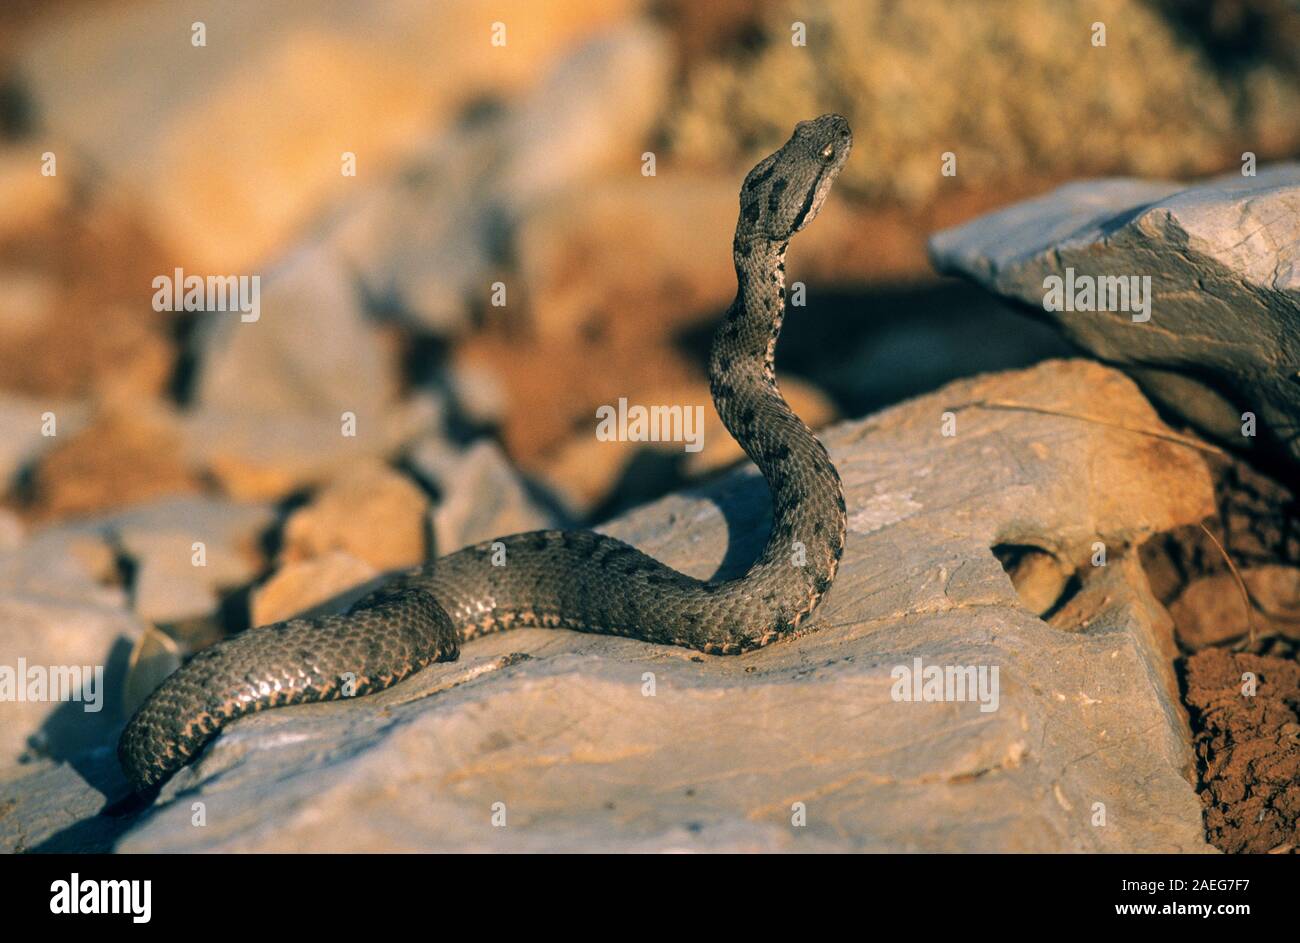 The Lebanon viper (Montivipera bornmuelleri) is a venomous viper species found in Lebanon, Jordan, Israel, and Syria. Photographed in Israel Stock Photo